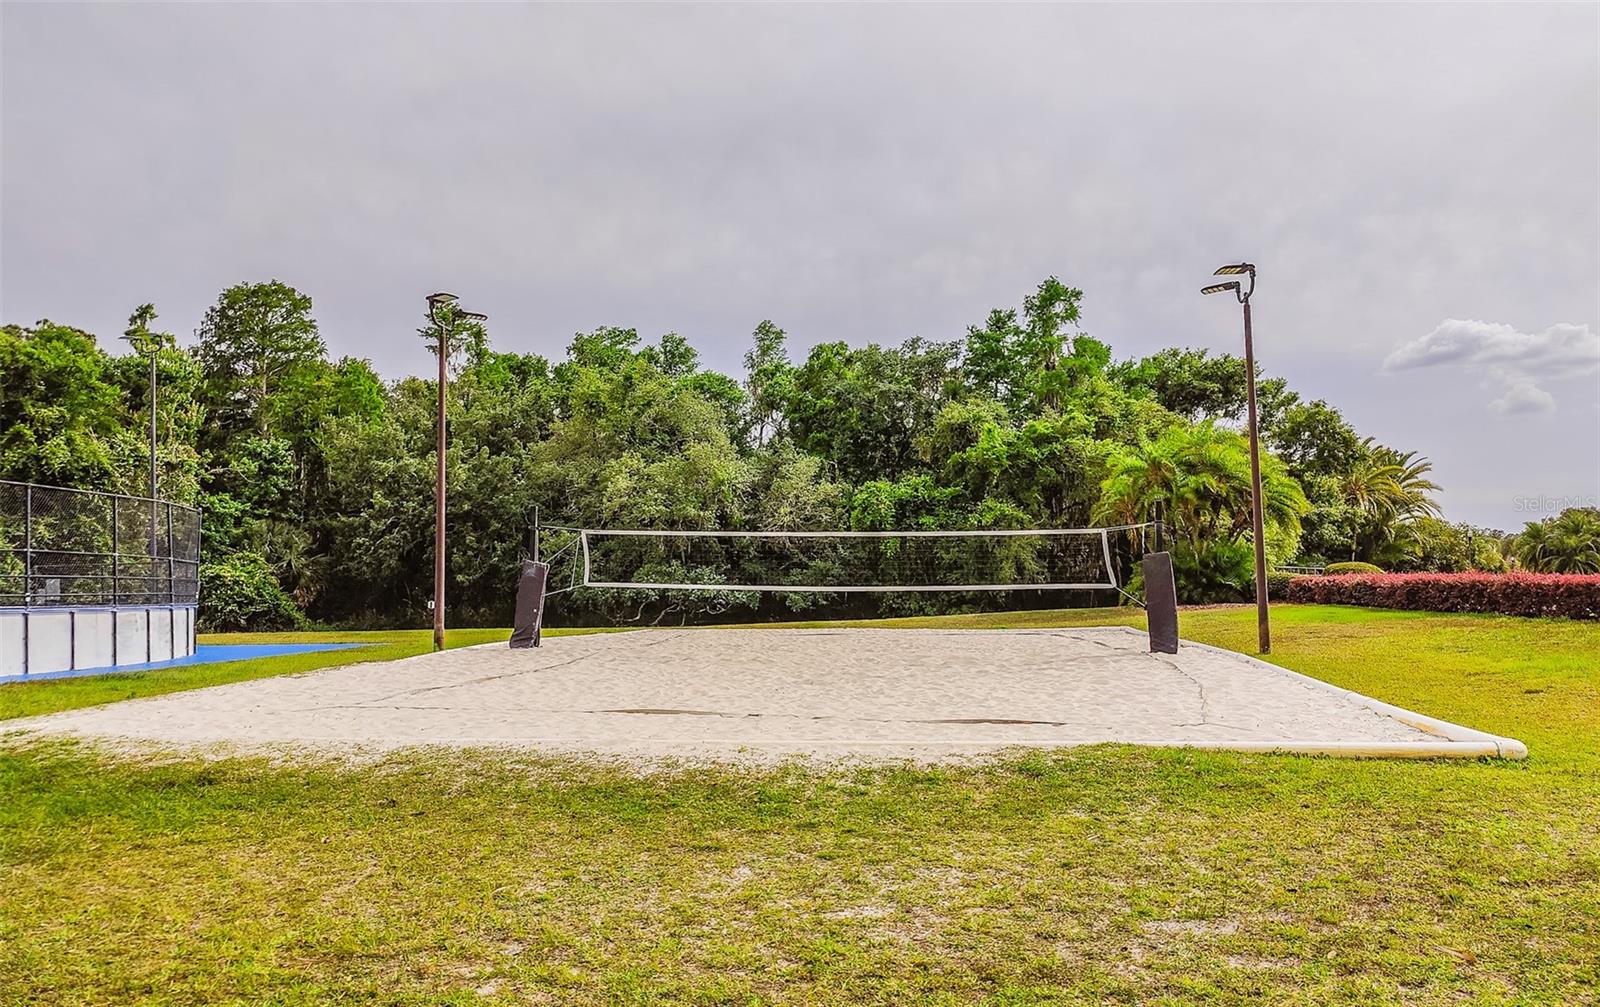 sand volleyball court